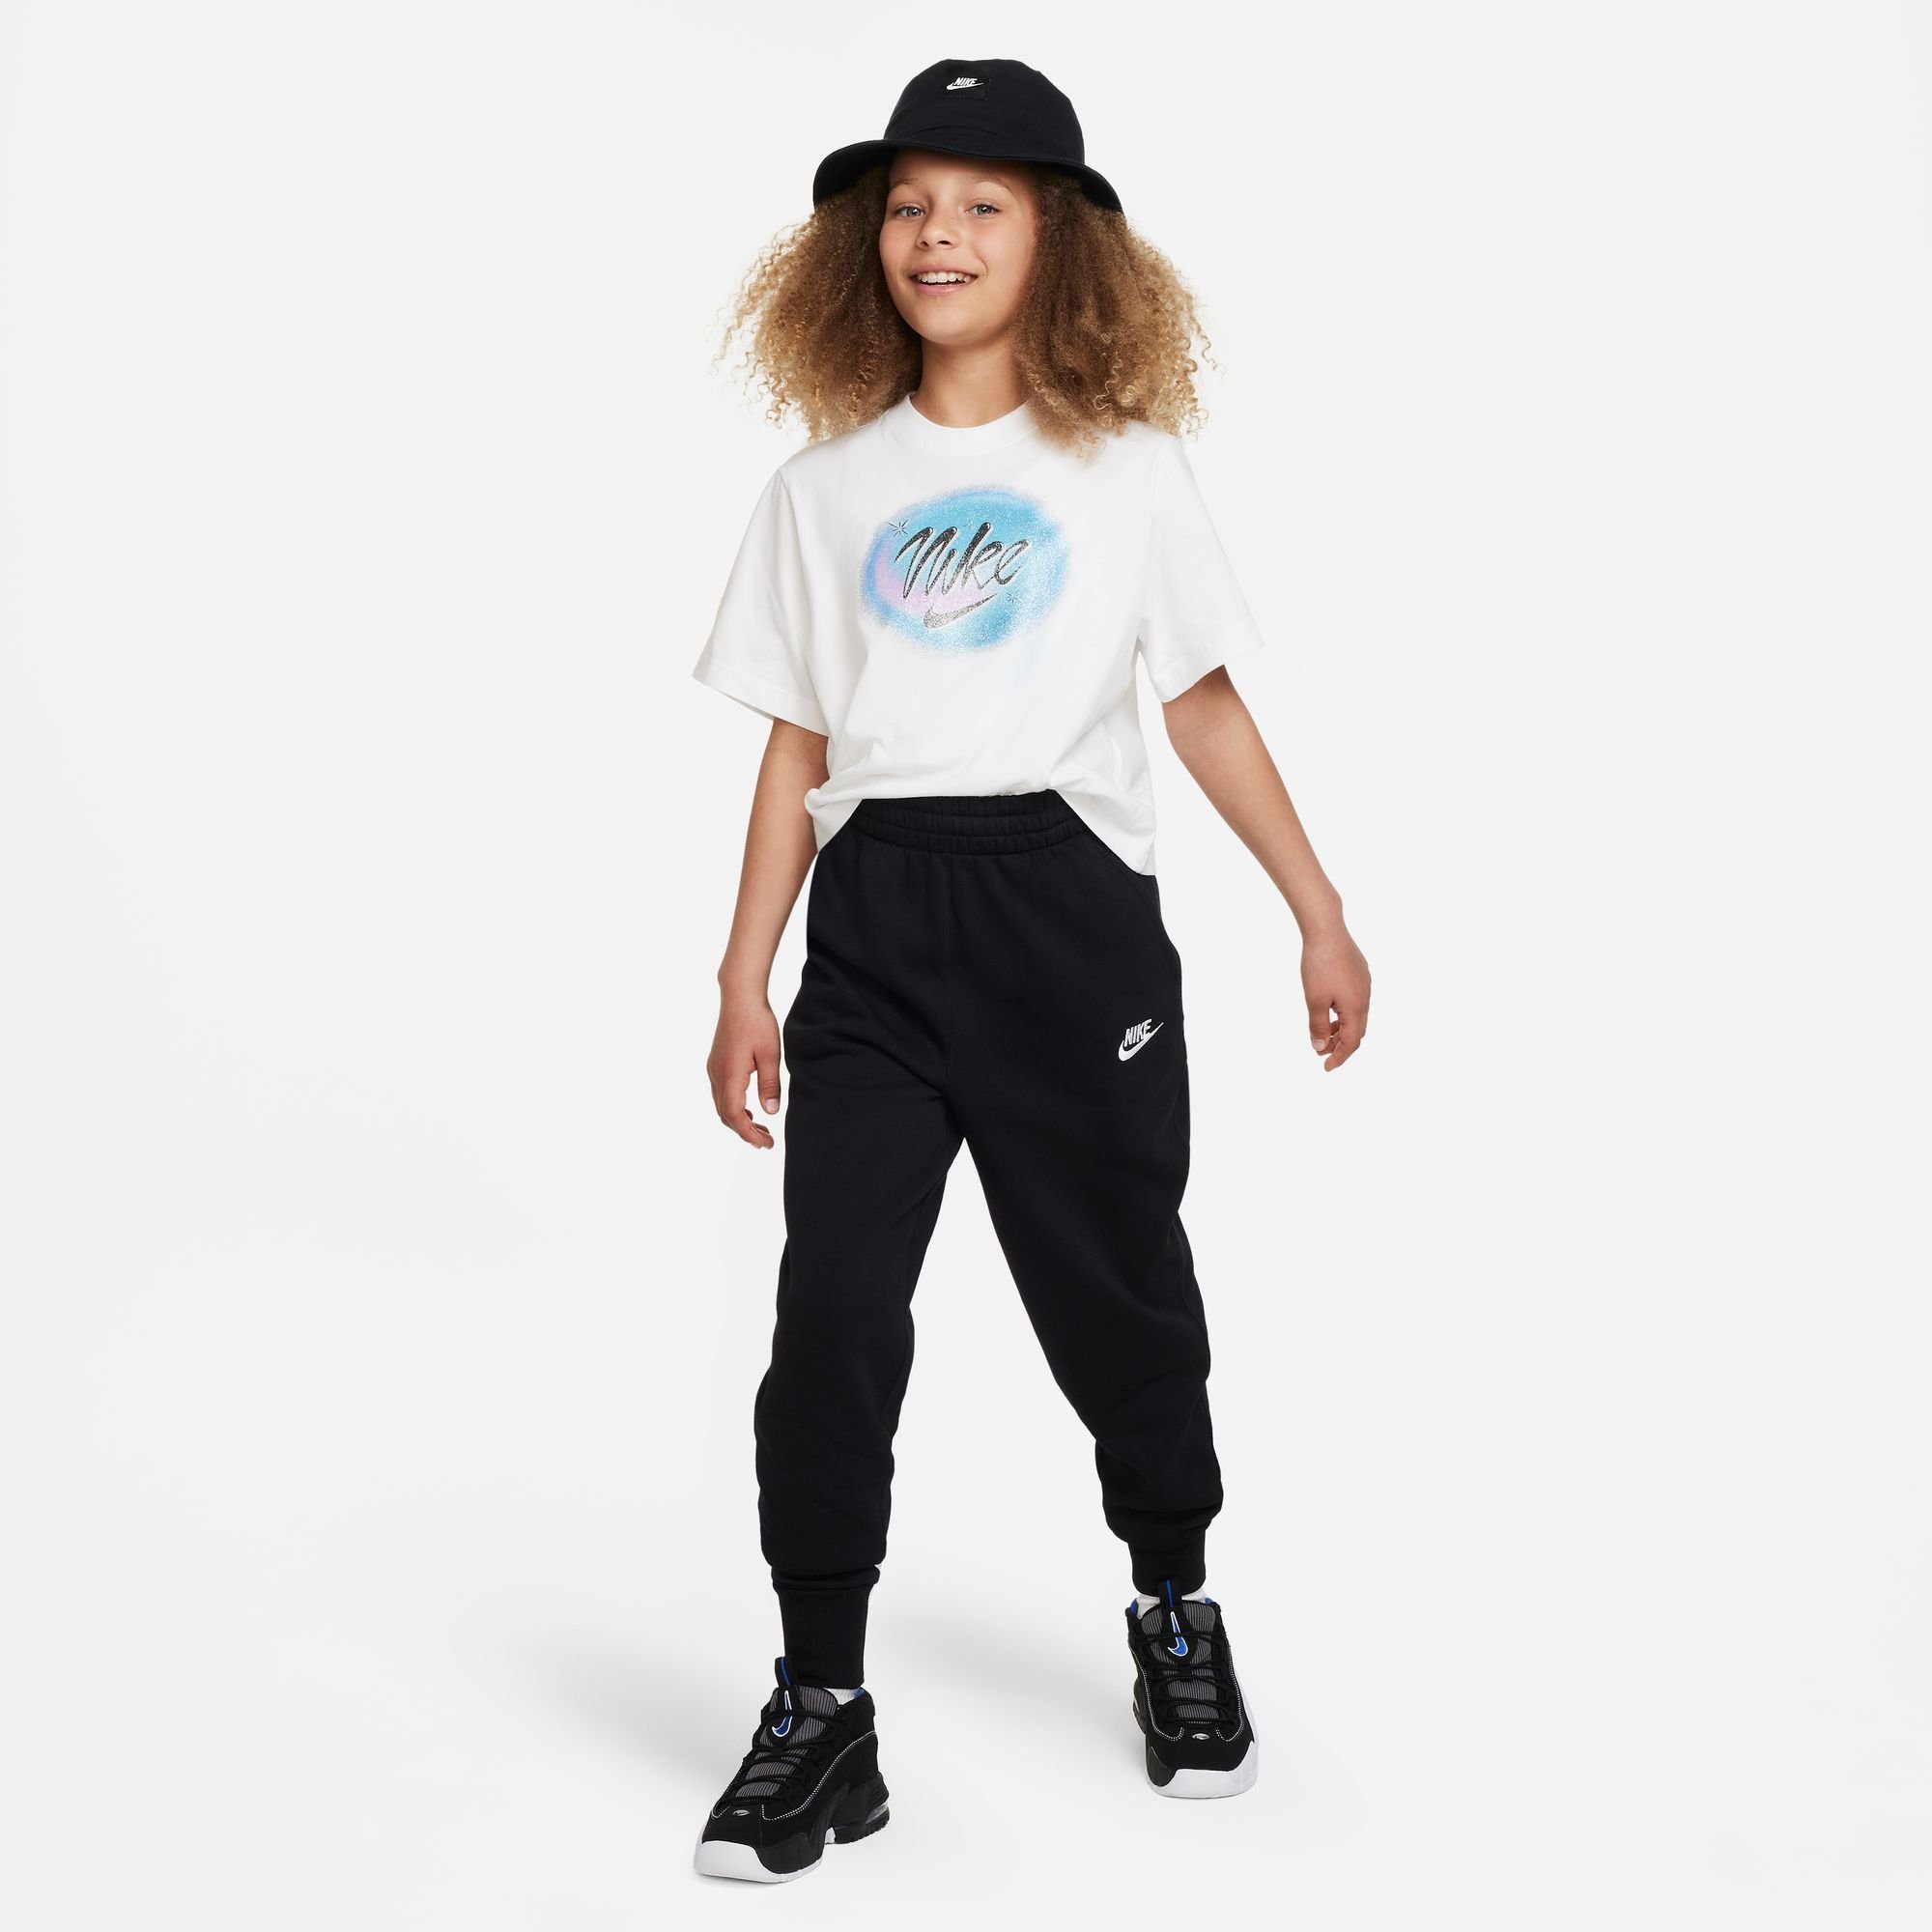 FLEECE Nike BIG BLACK/BLACK/WHITE Jogginghose KIDS' FITTED (GIRLS) Sportswear CLUB HIGH-WAISTED PANTS